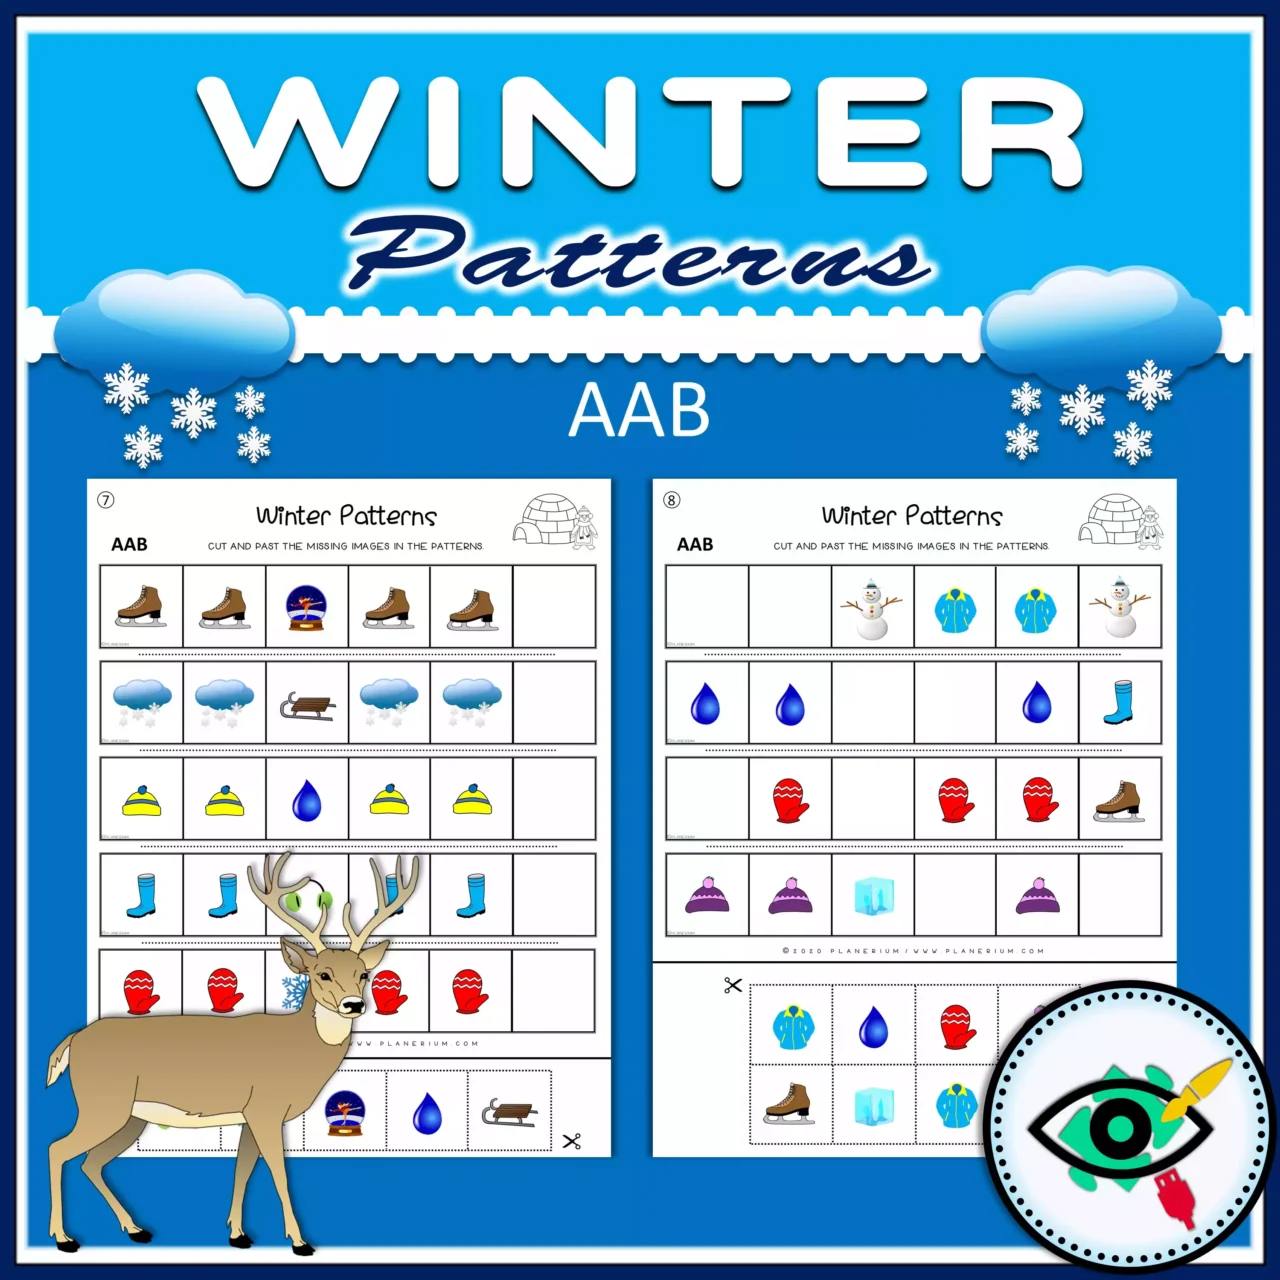 Winter - Patterns Activity - Image Title 5